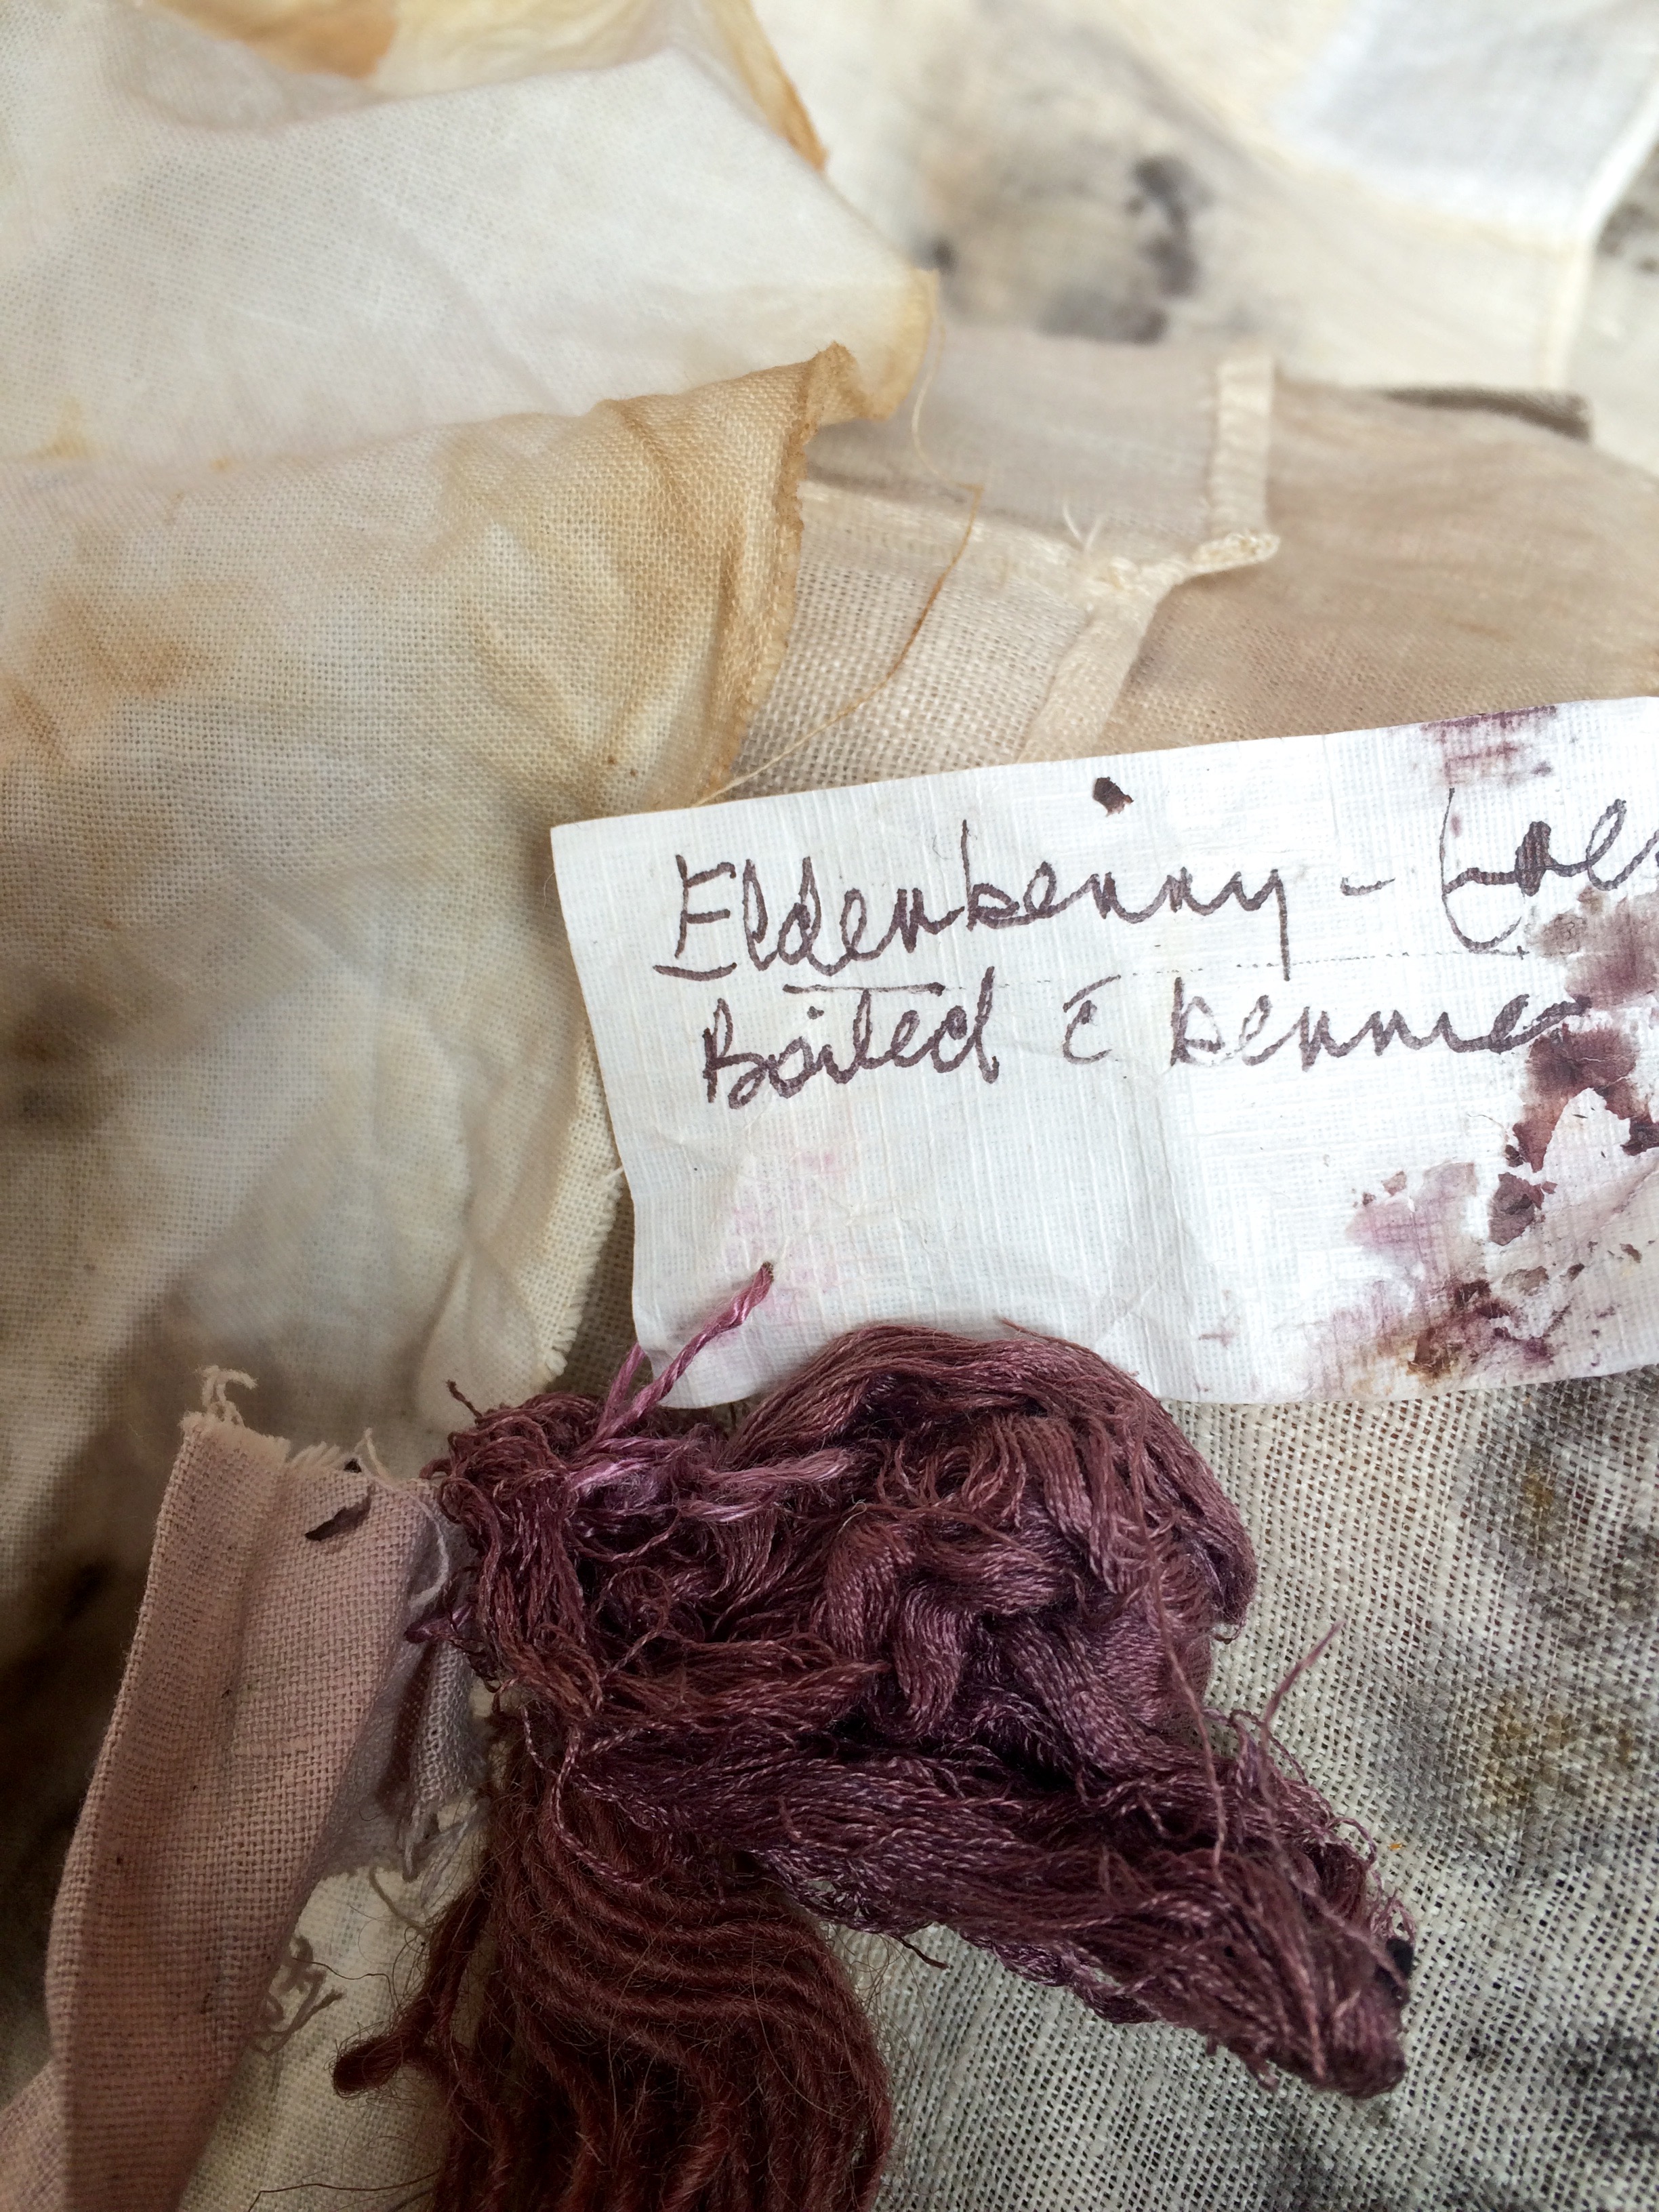 Elderberry plant dye